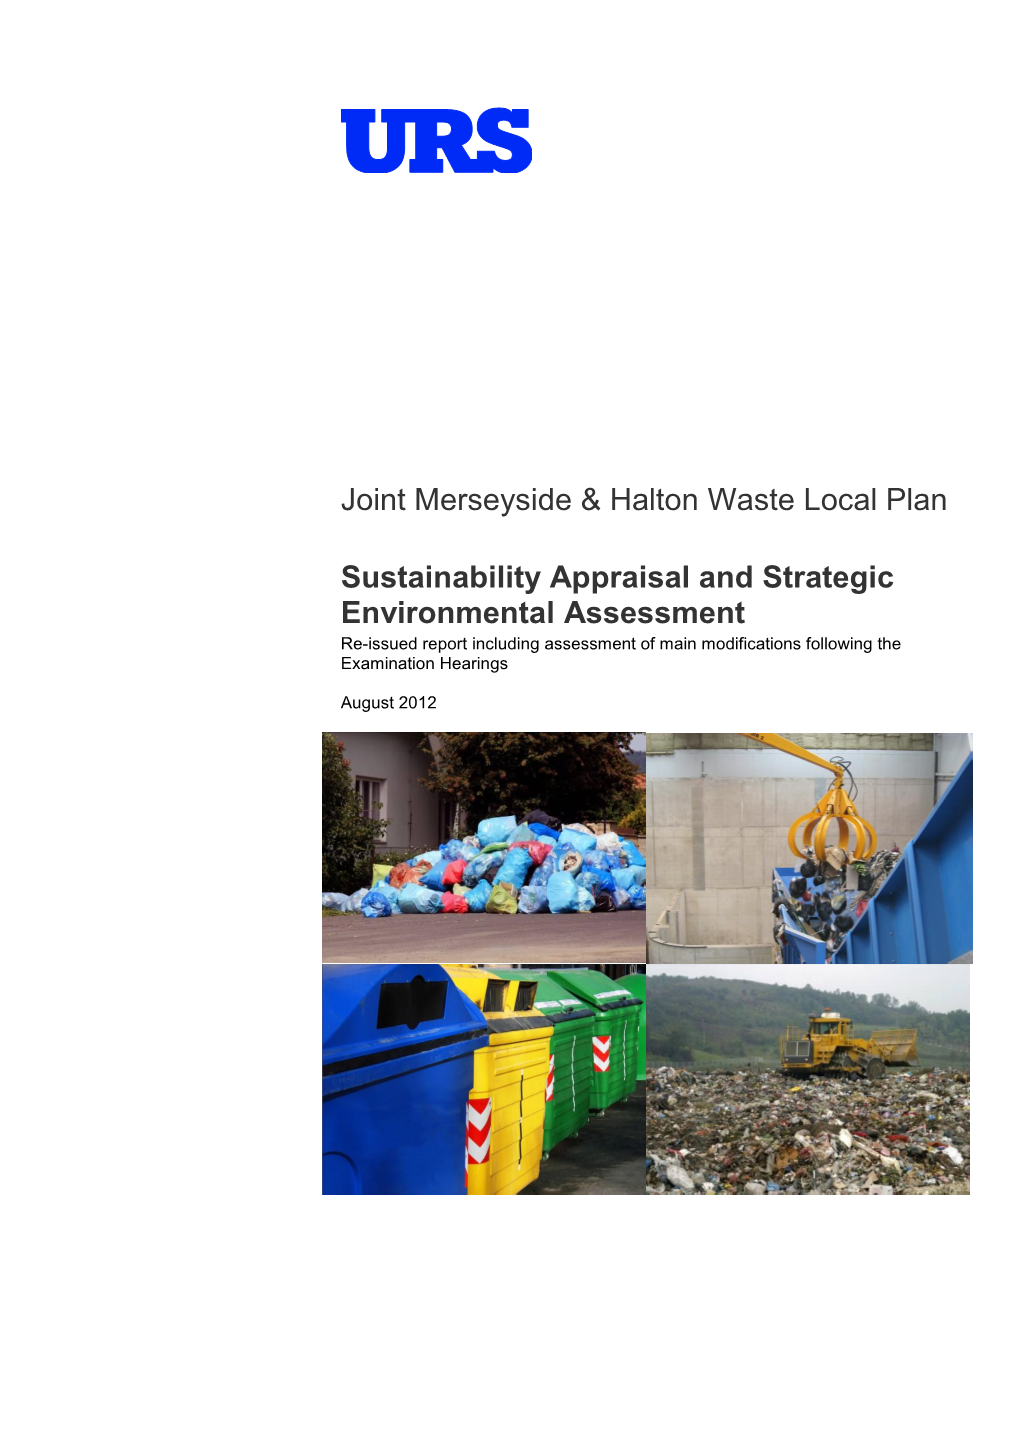 Joint Merseyside & Halton Waste Local Plan Sustainability Appraisal